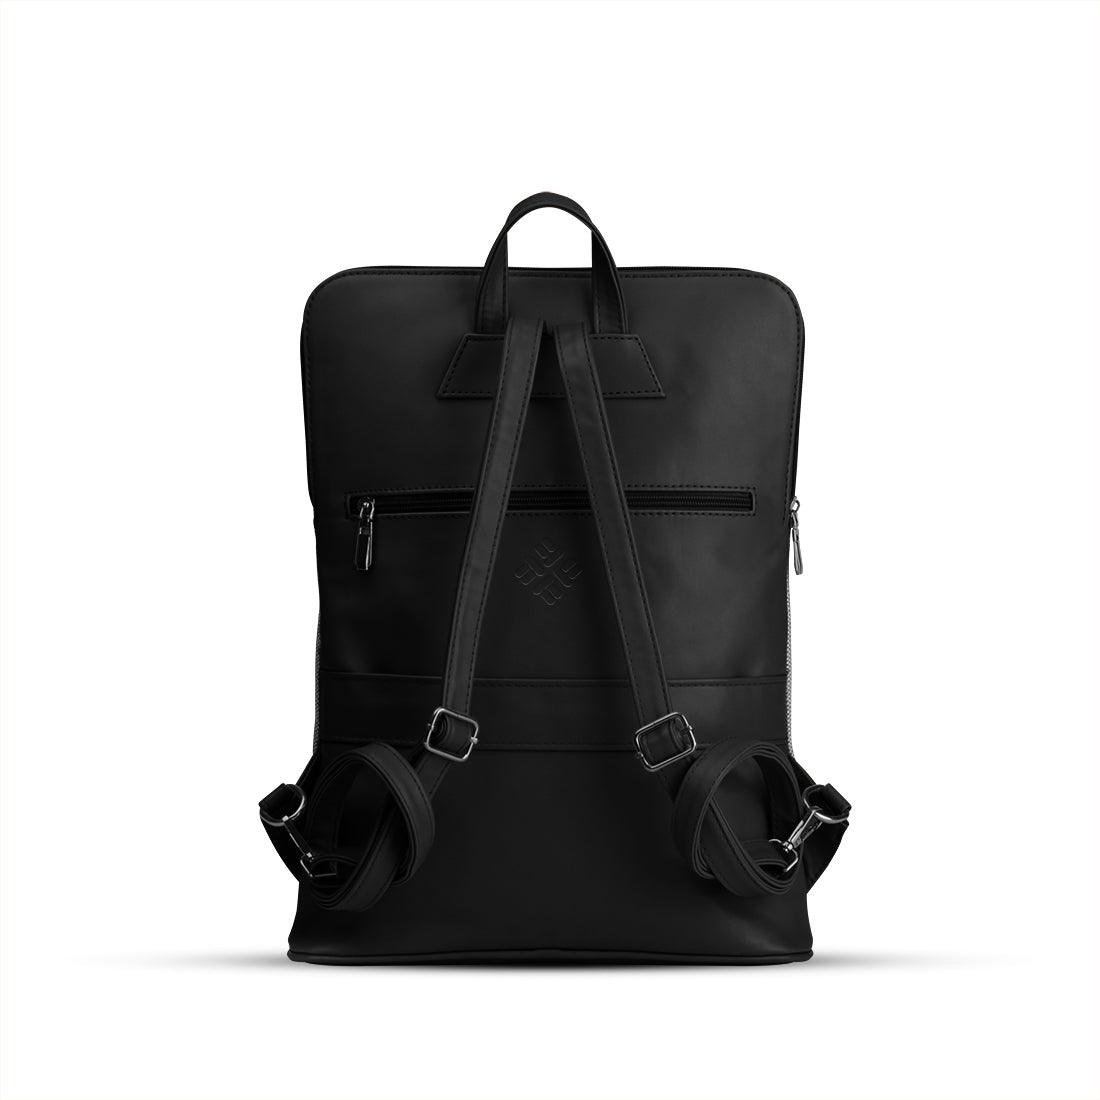 Black Orbit Laptop Backpack Flamingos & Arrows - CANVAEGYPT